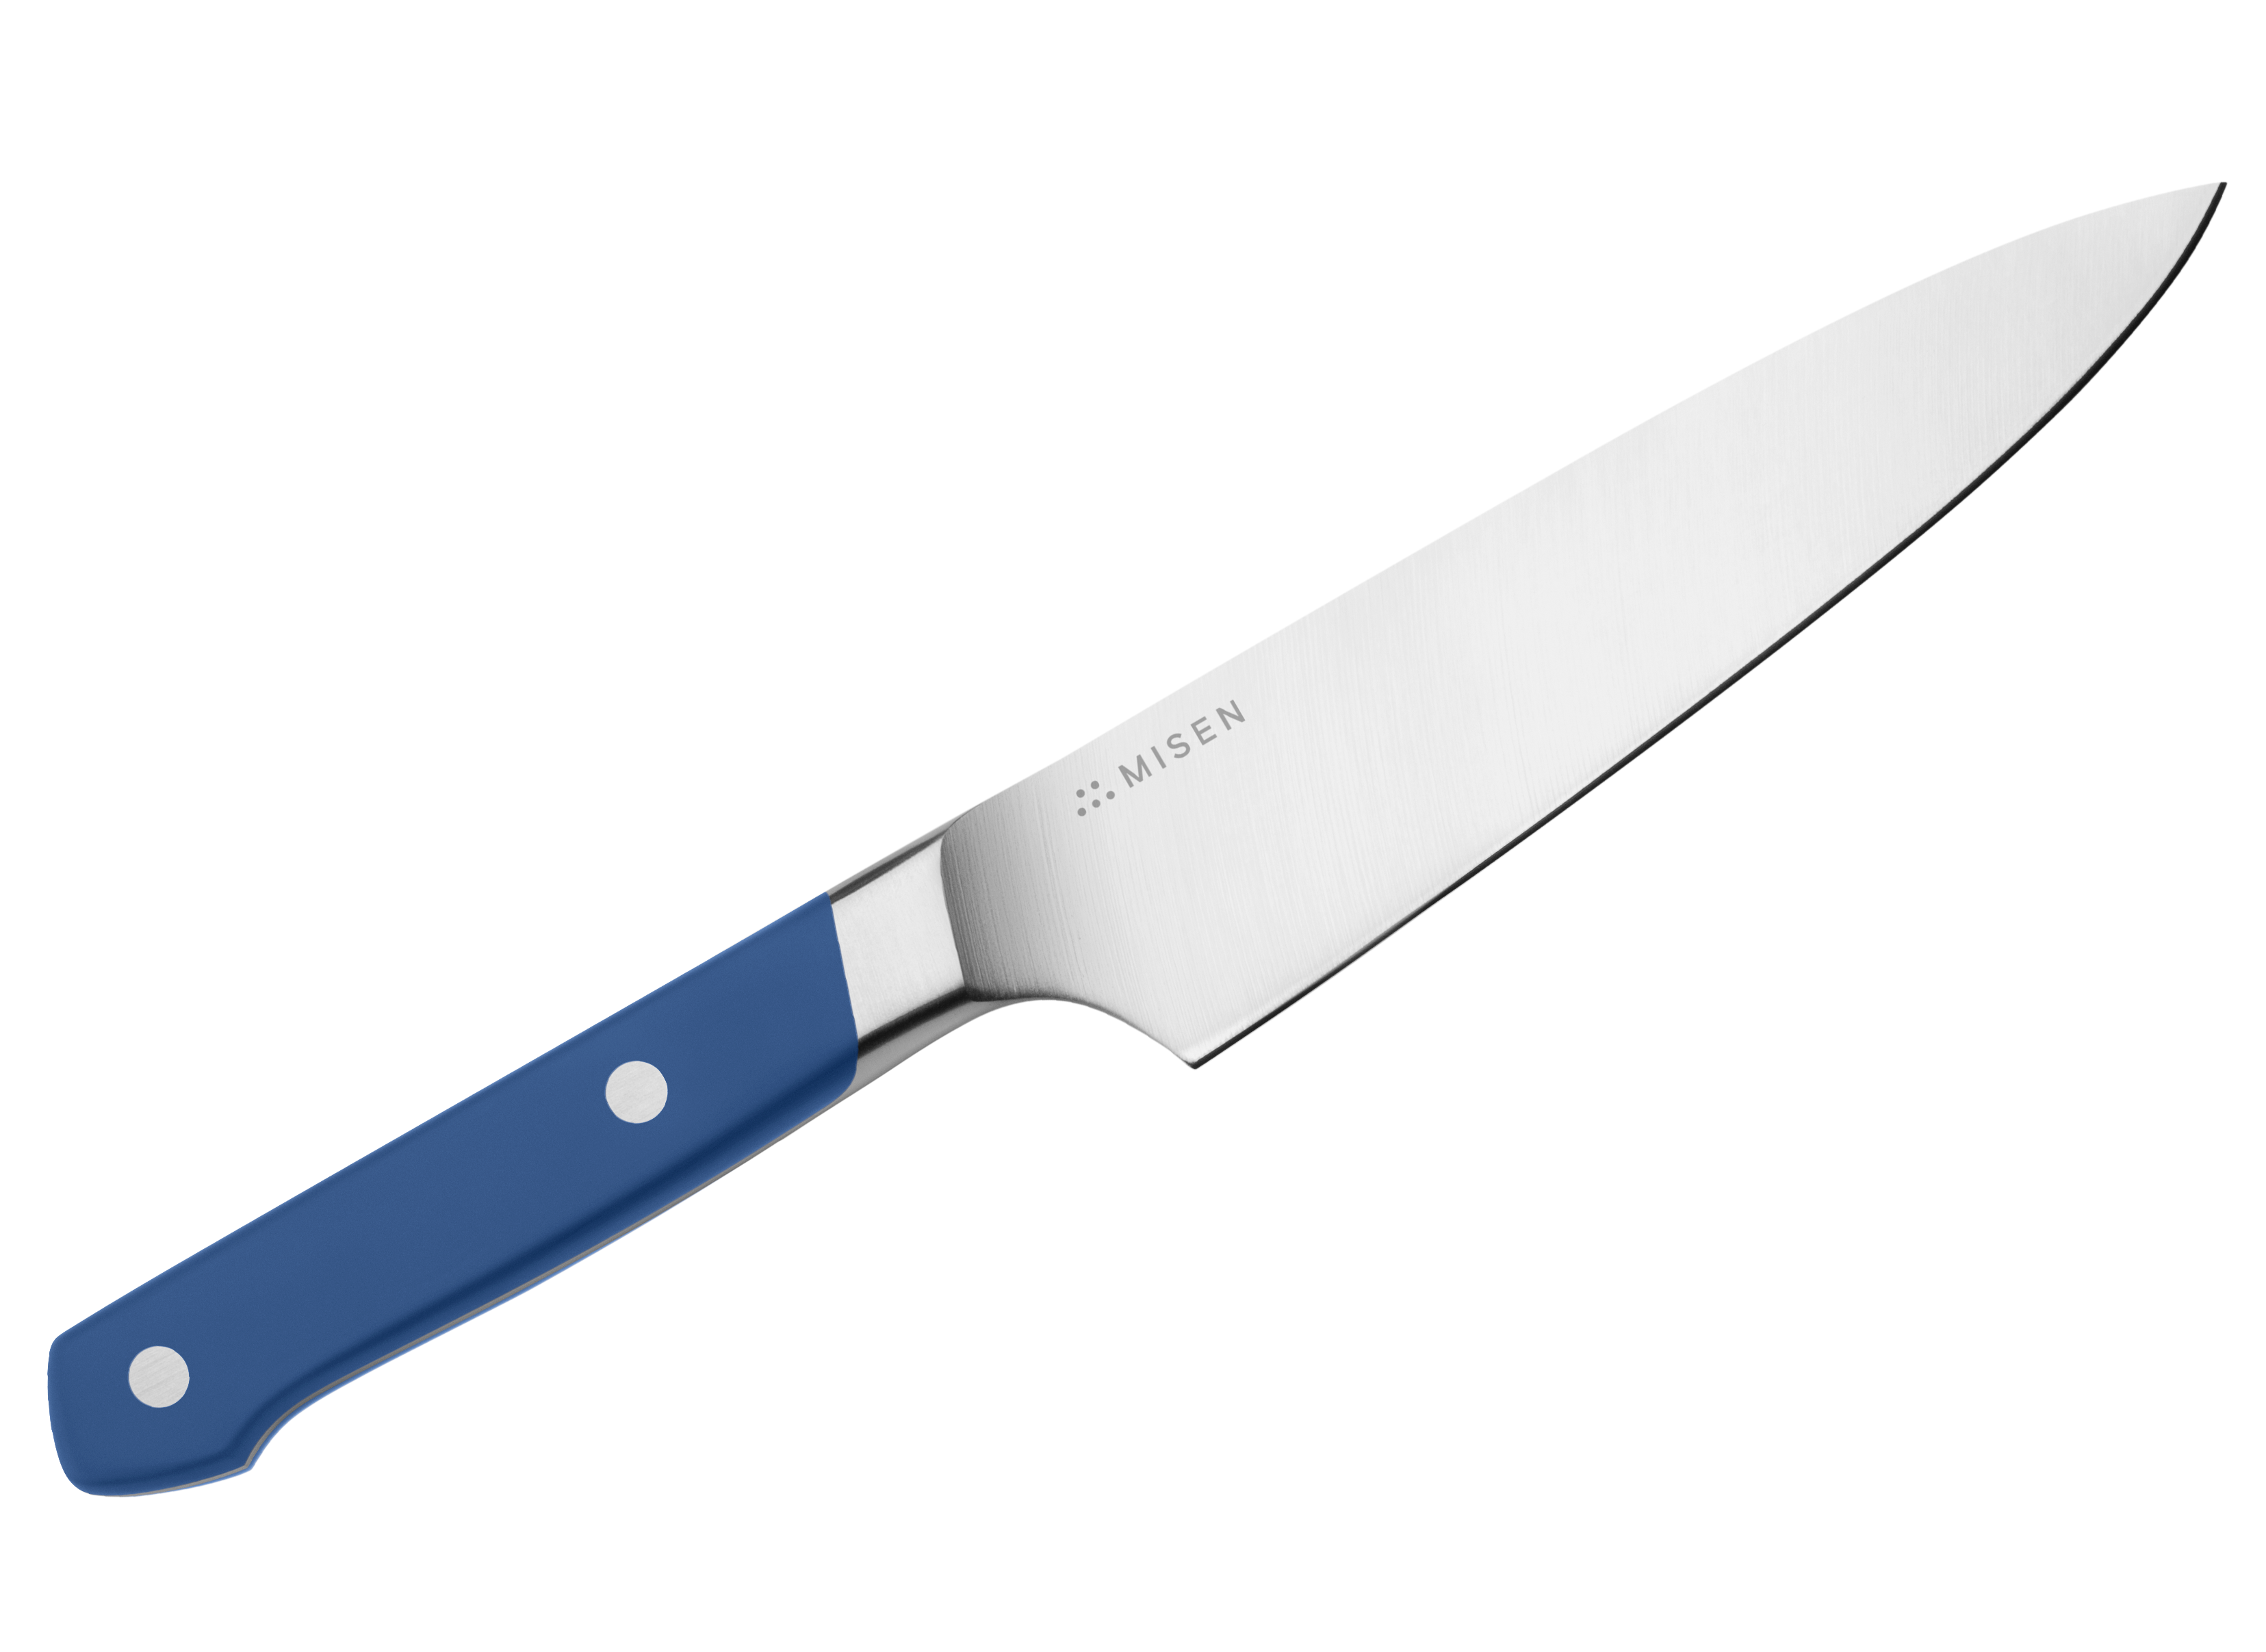 5.5 Utility Knife